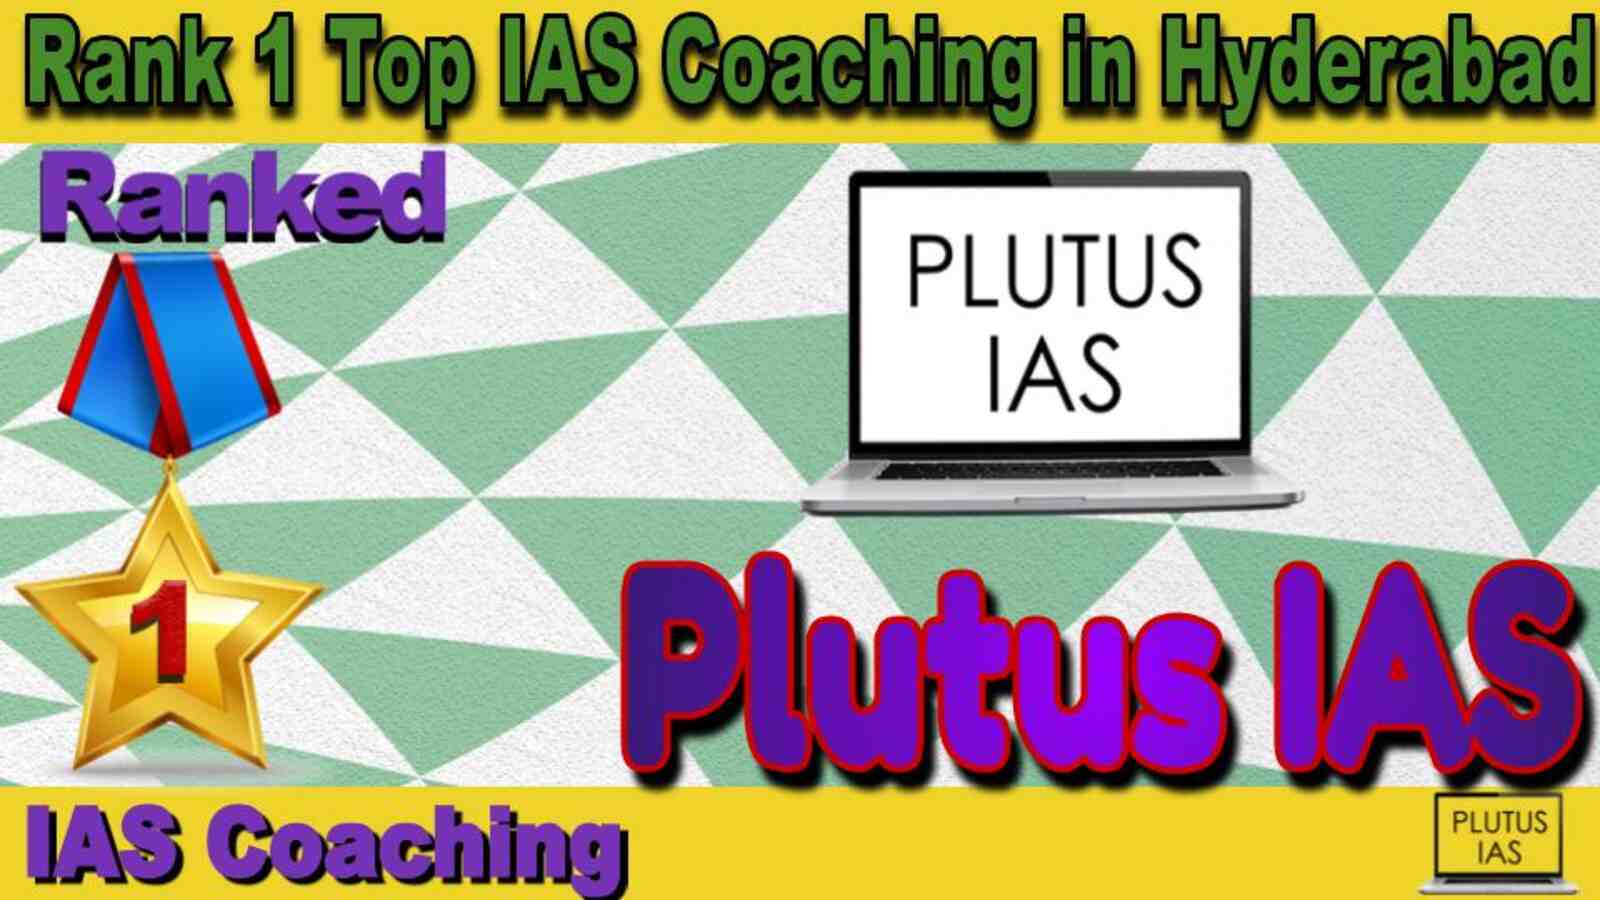 Top IAS Coaching in Hyderabad. Best IAS Coaching in Hyderabad.